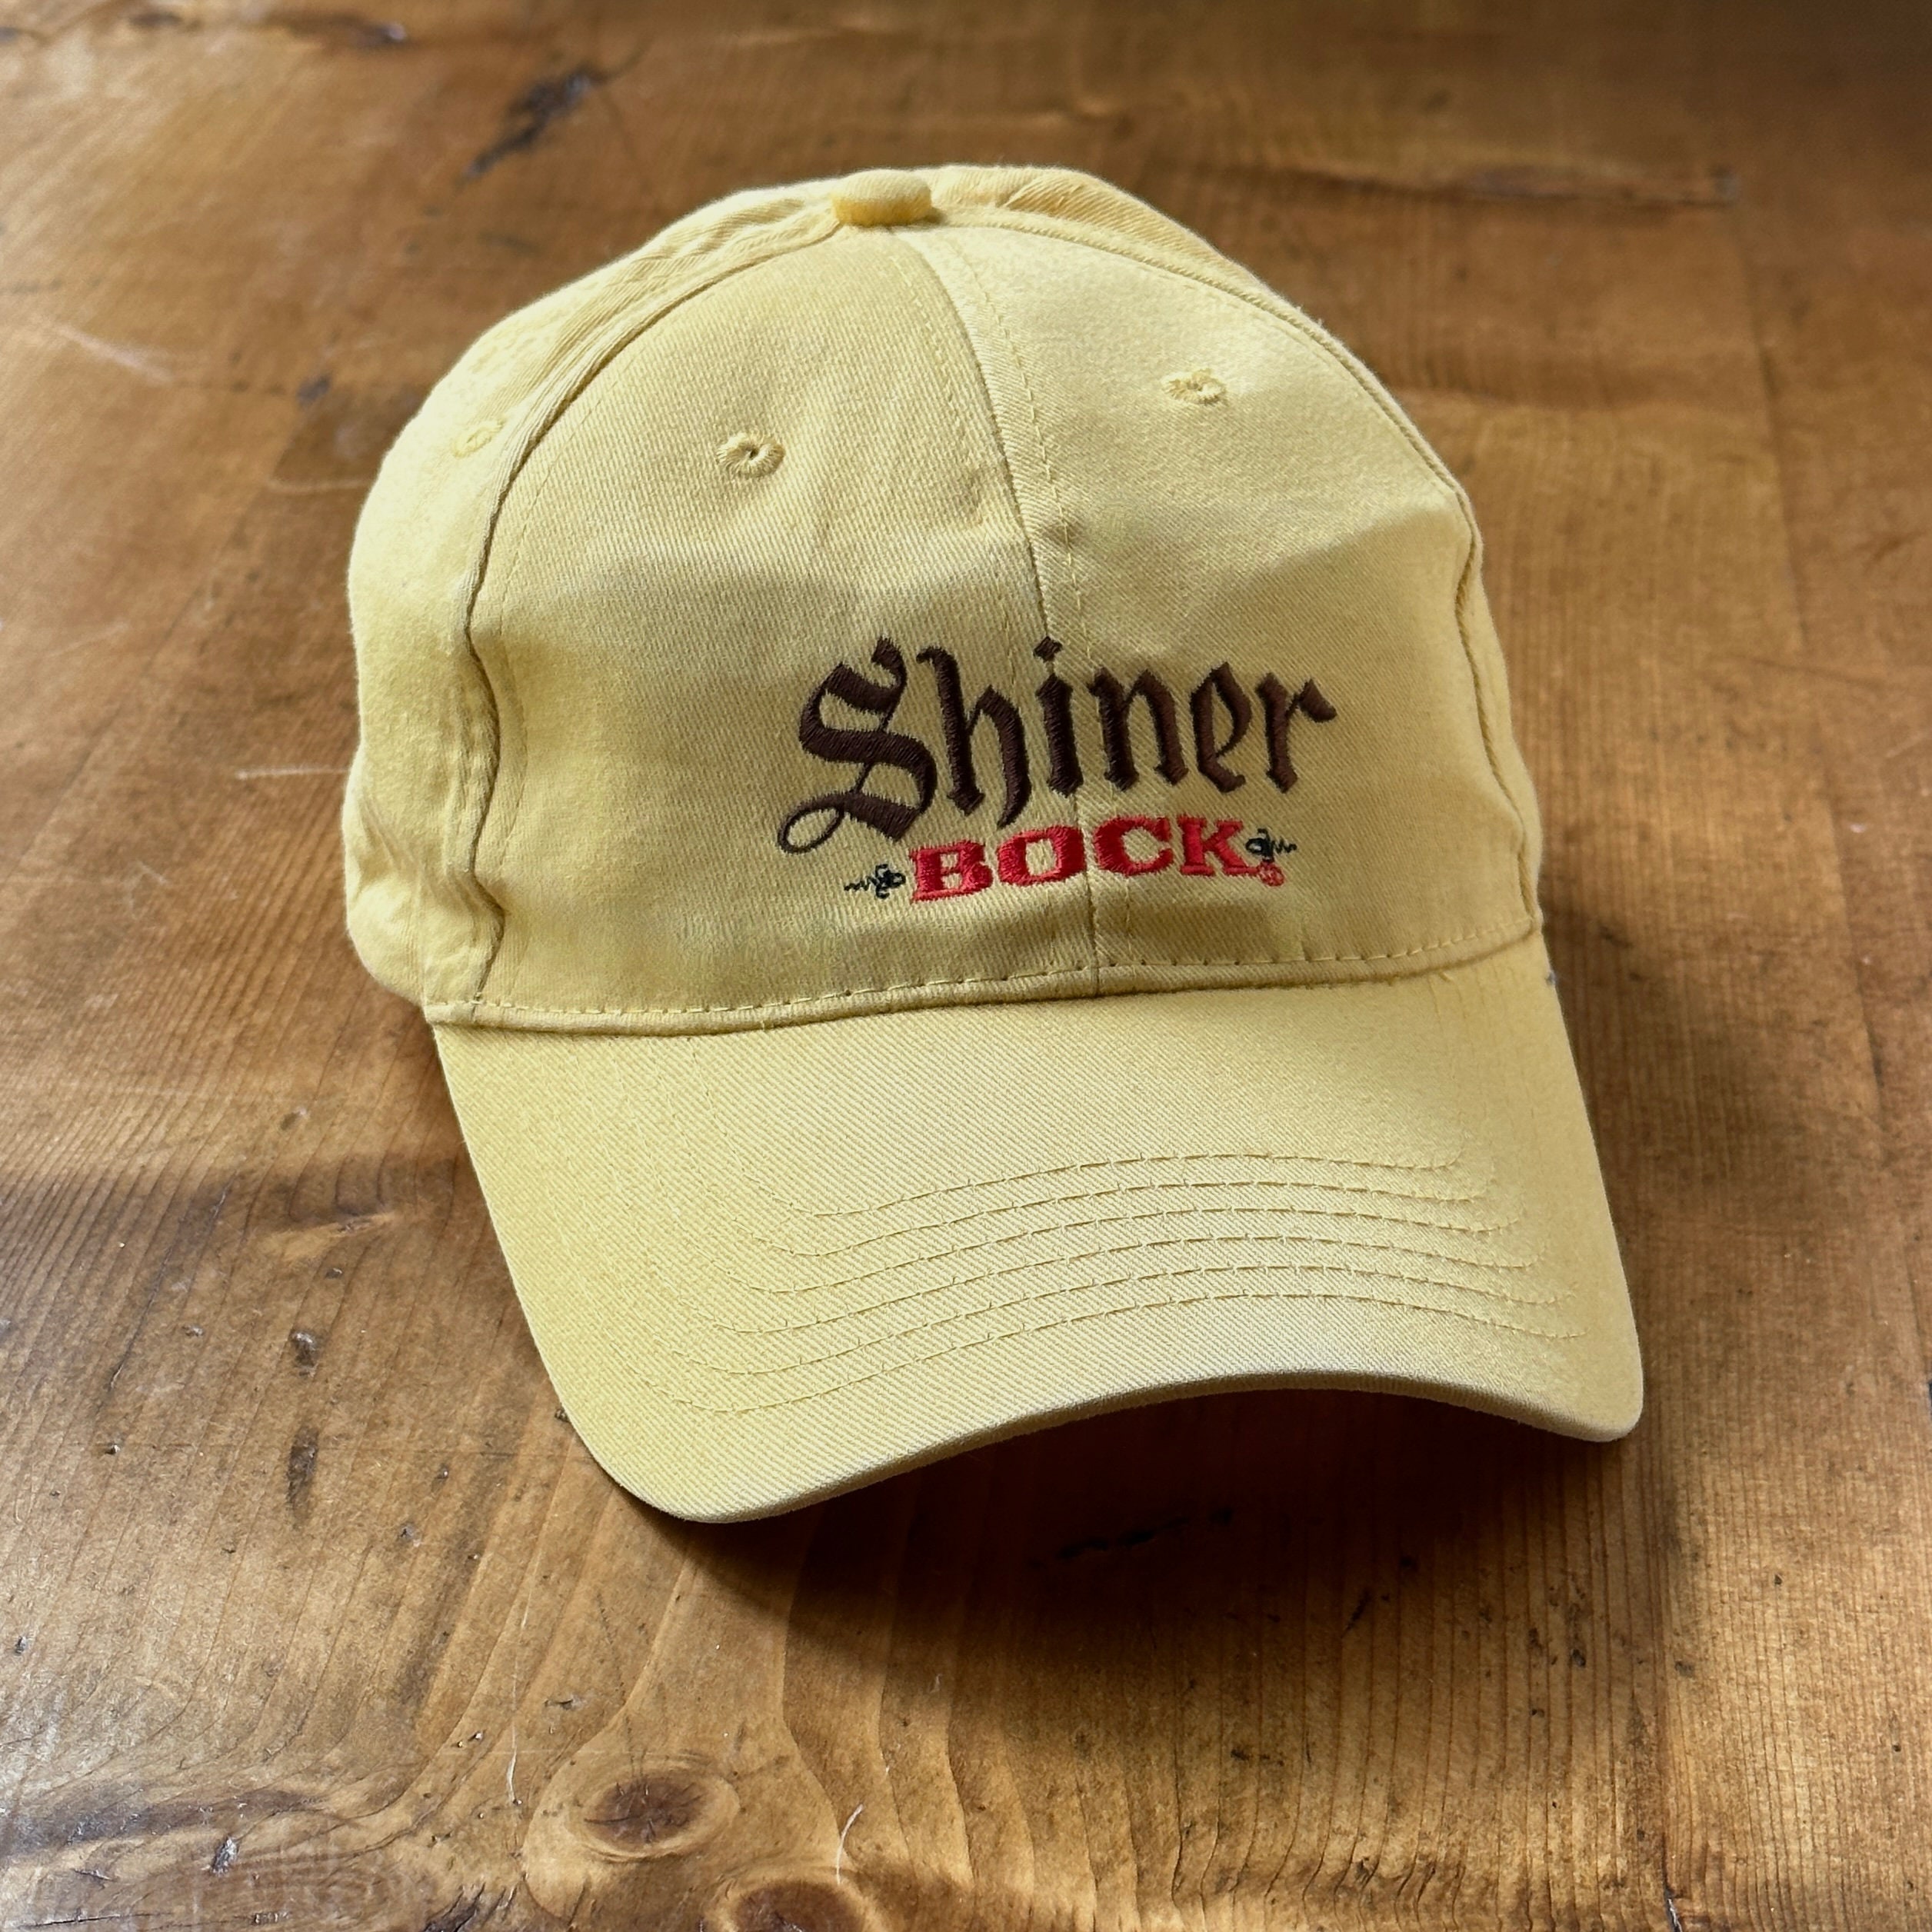 Shiner beer gift Etsy 日本